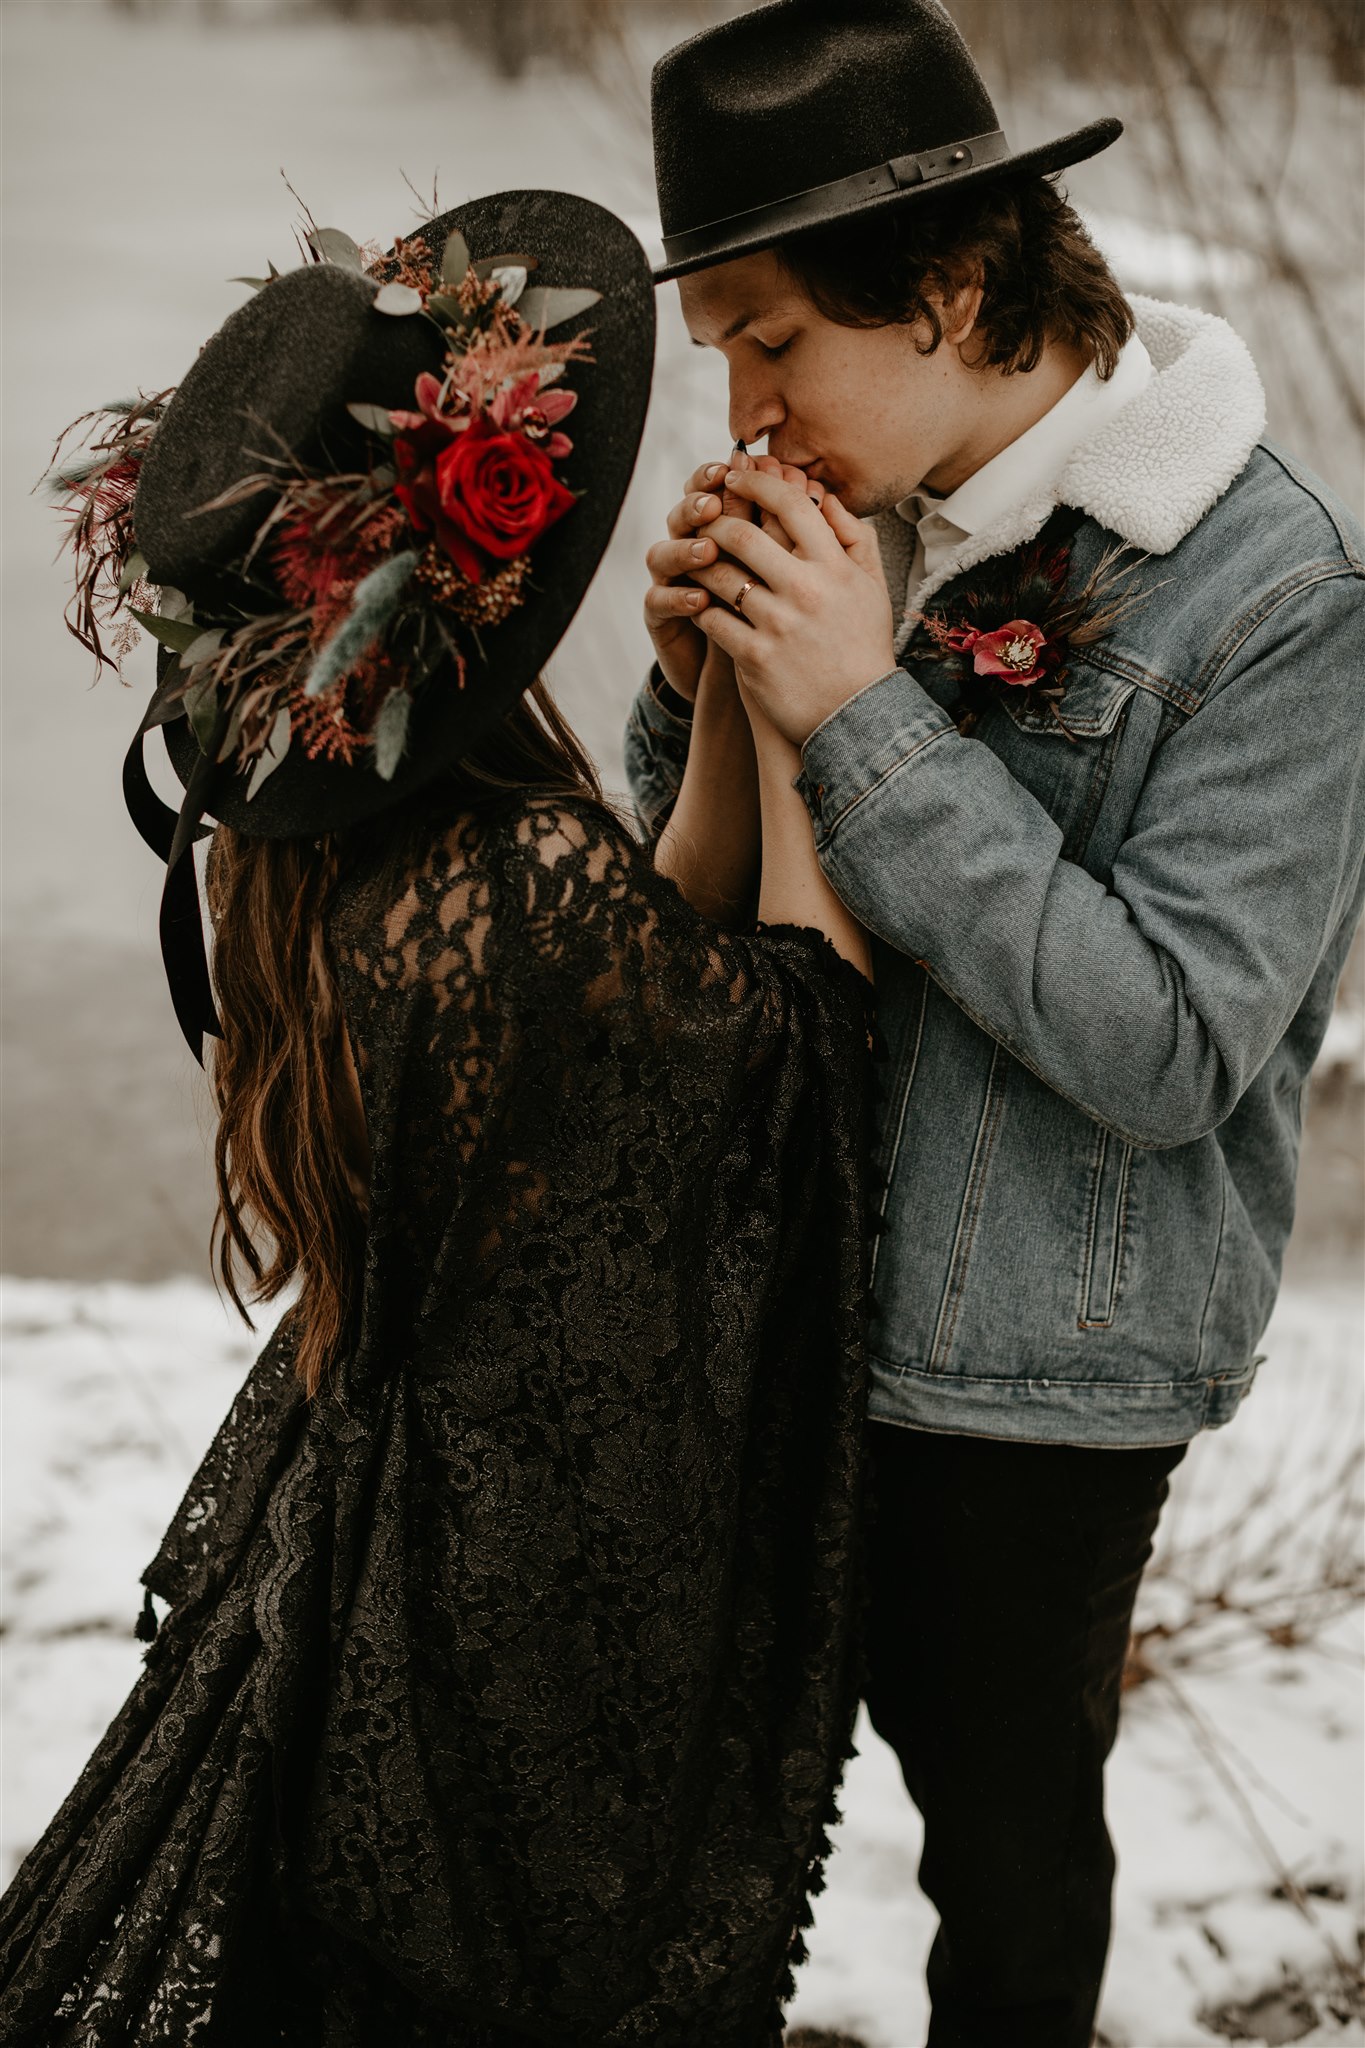 Boho bride in black wedding dress with black wedding hat with red flower garland and boho groom in jean jacket